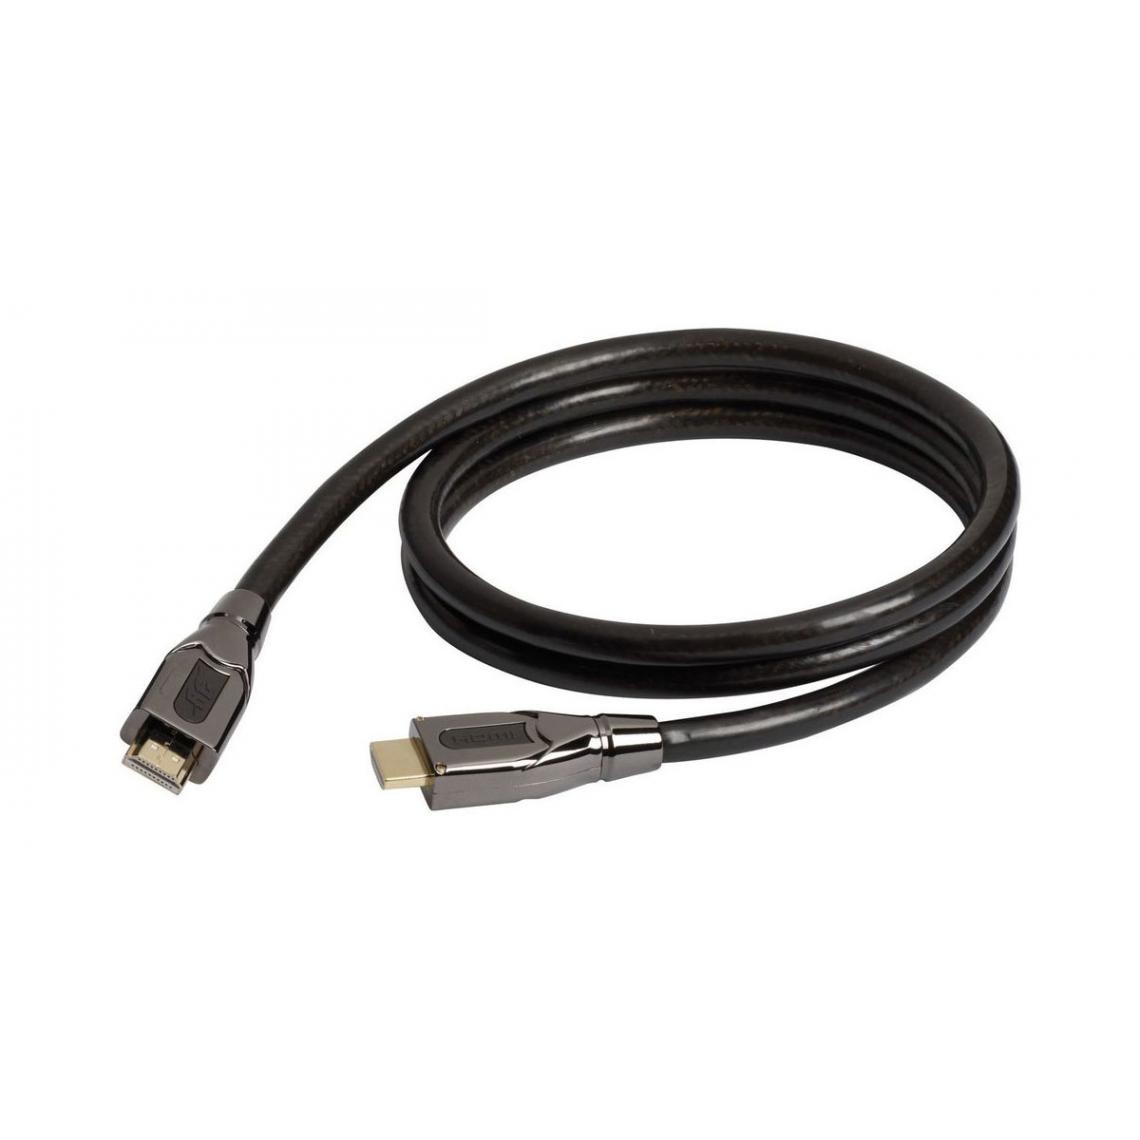 Real cable - Real Cable HD-E-2 - Câble HDMI de 10 m - Câble antenne